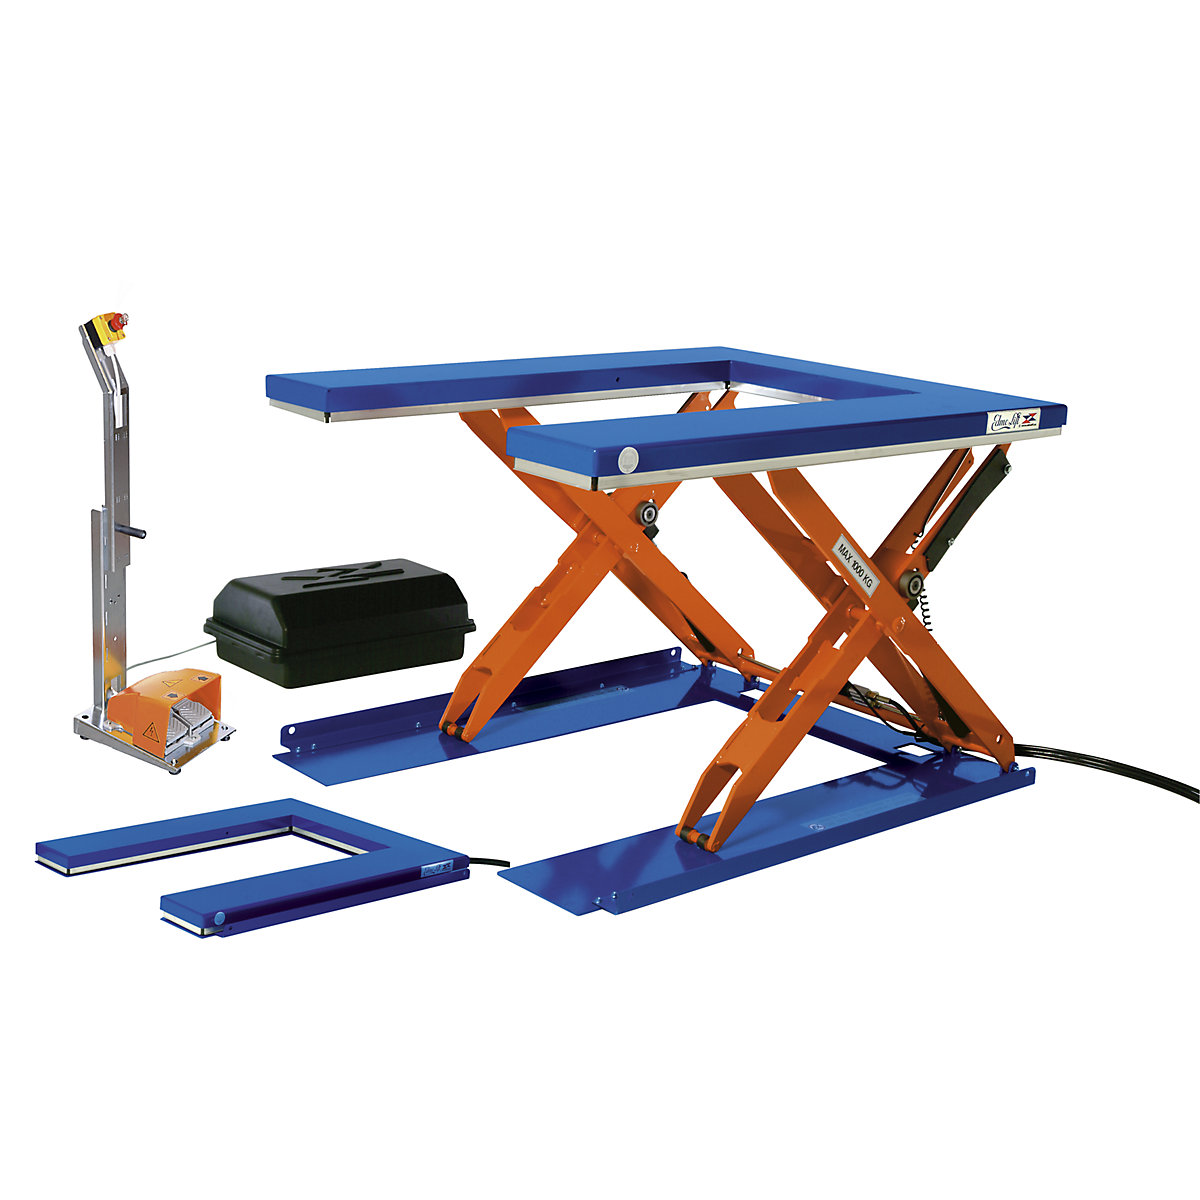 Low profile lift table – Edmolift, LxW 1450 x 1085 mm, lifting range up to 800 mm, U-shaped platform, 400 V, foot operated control unit